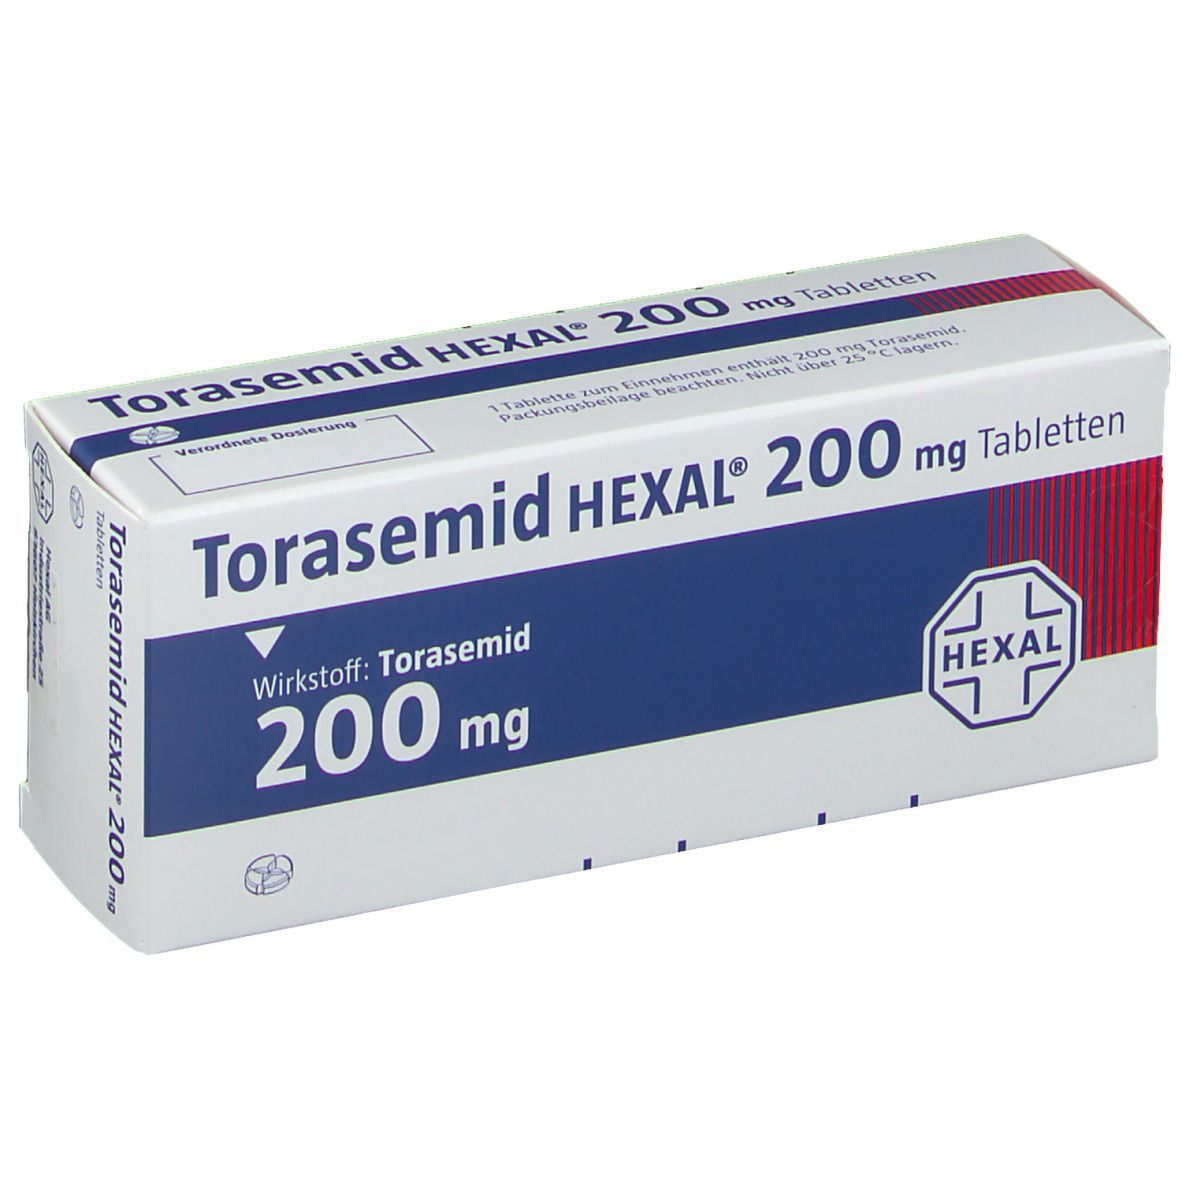 Torasemid HEXAL® 200 mg